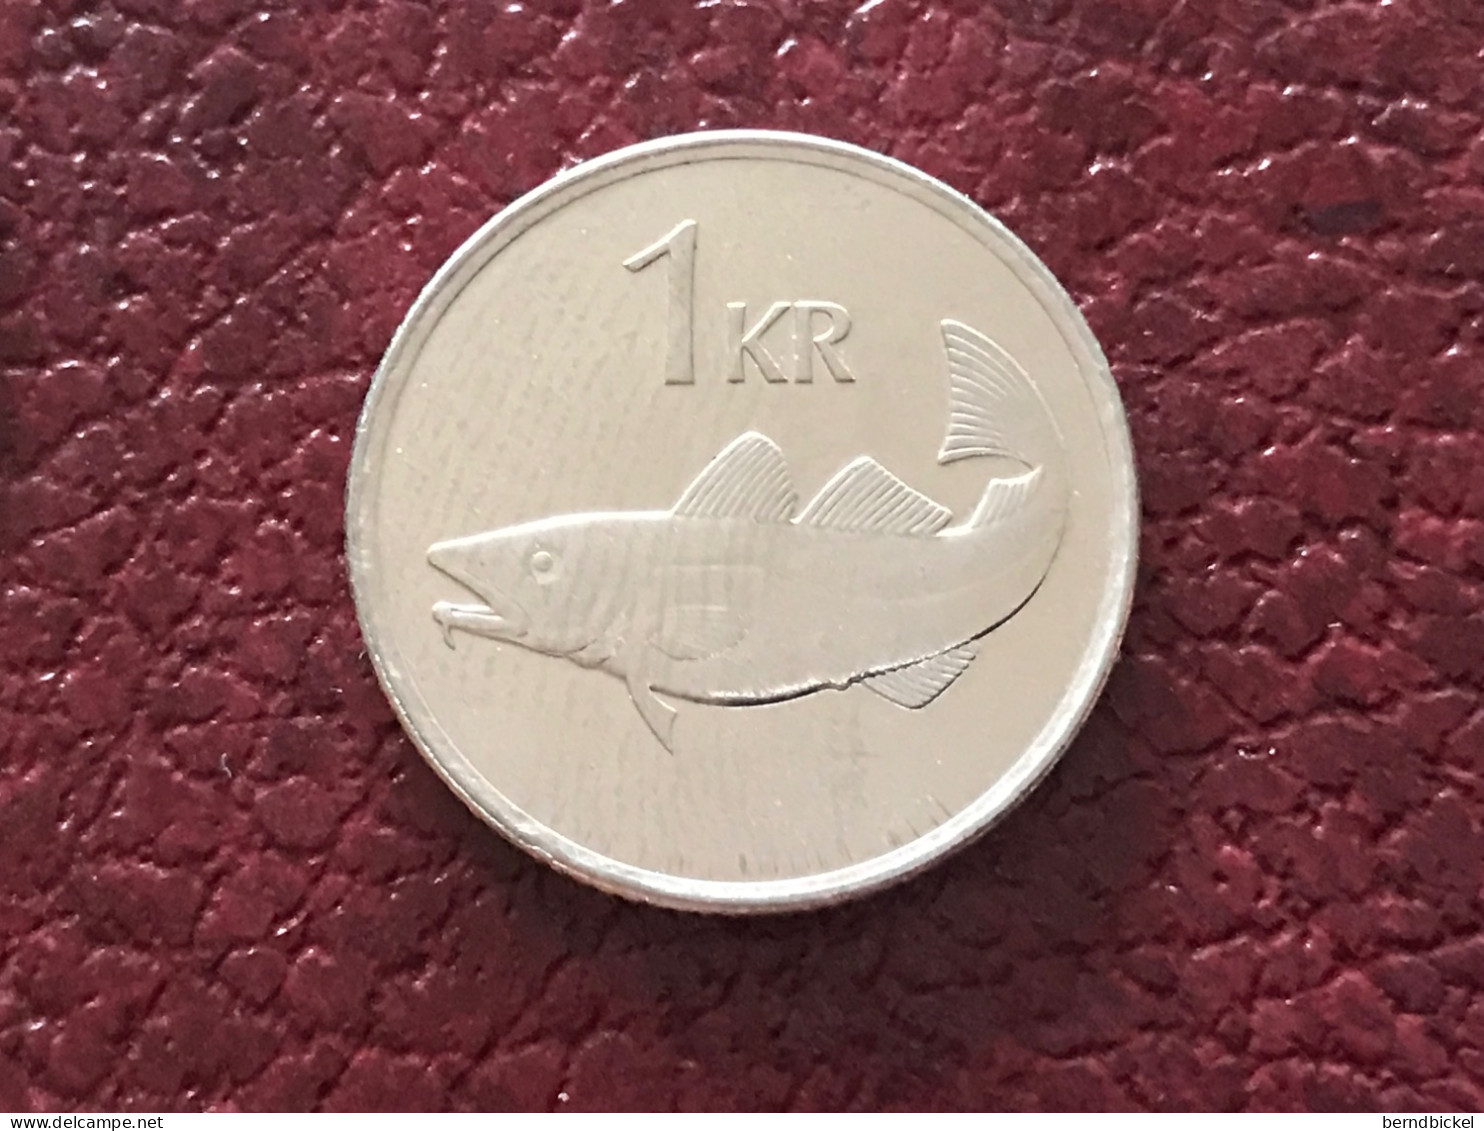 Münze Münzen Umlaufmünze Island 1 Krone 1992 - Islandia